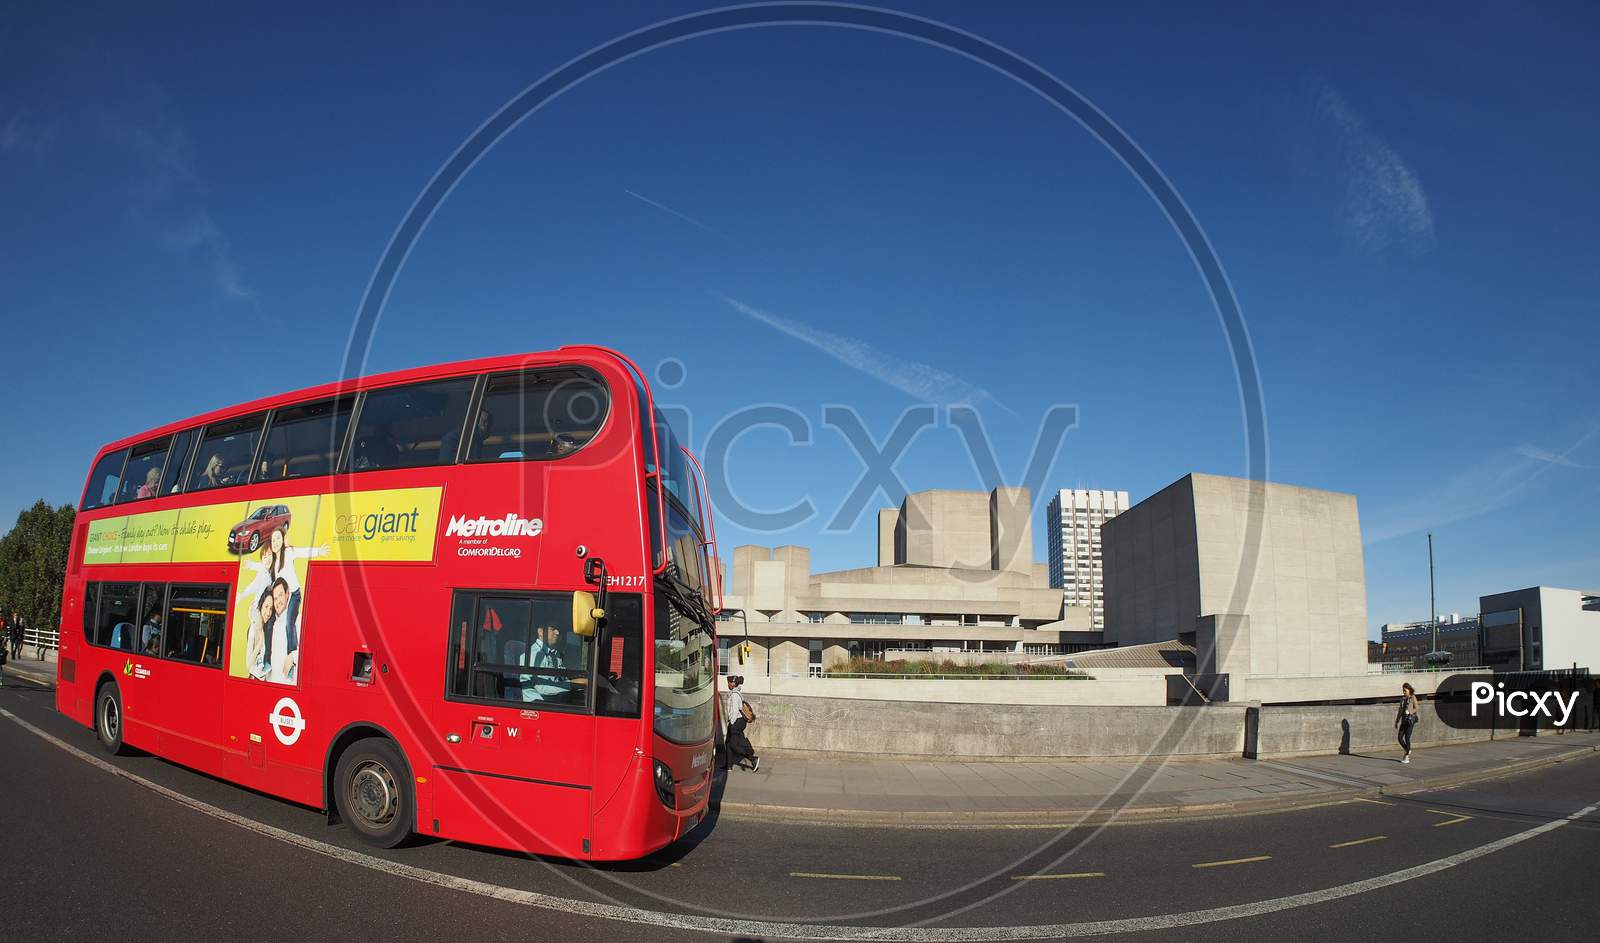 London, Uk - September 28, 2015: Red Double Decker Bus For Public Transport In Central London